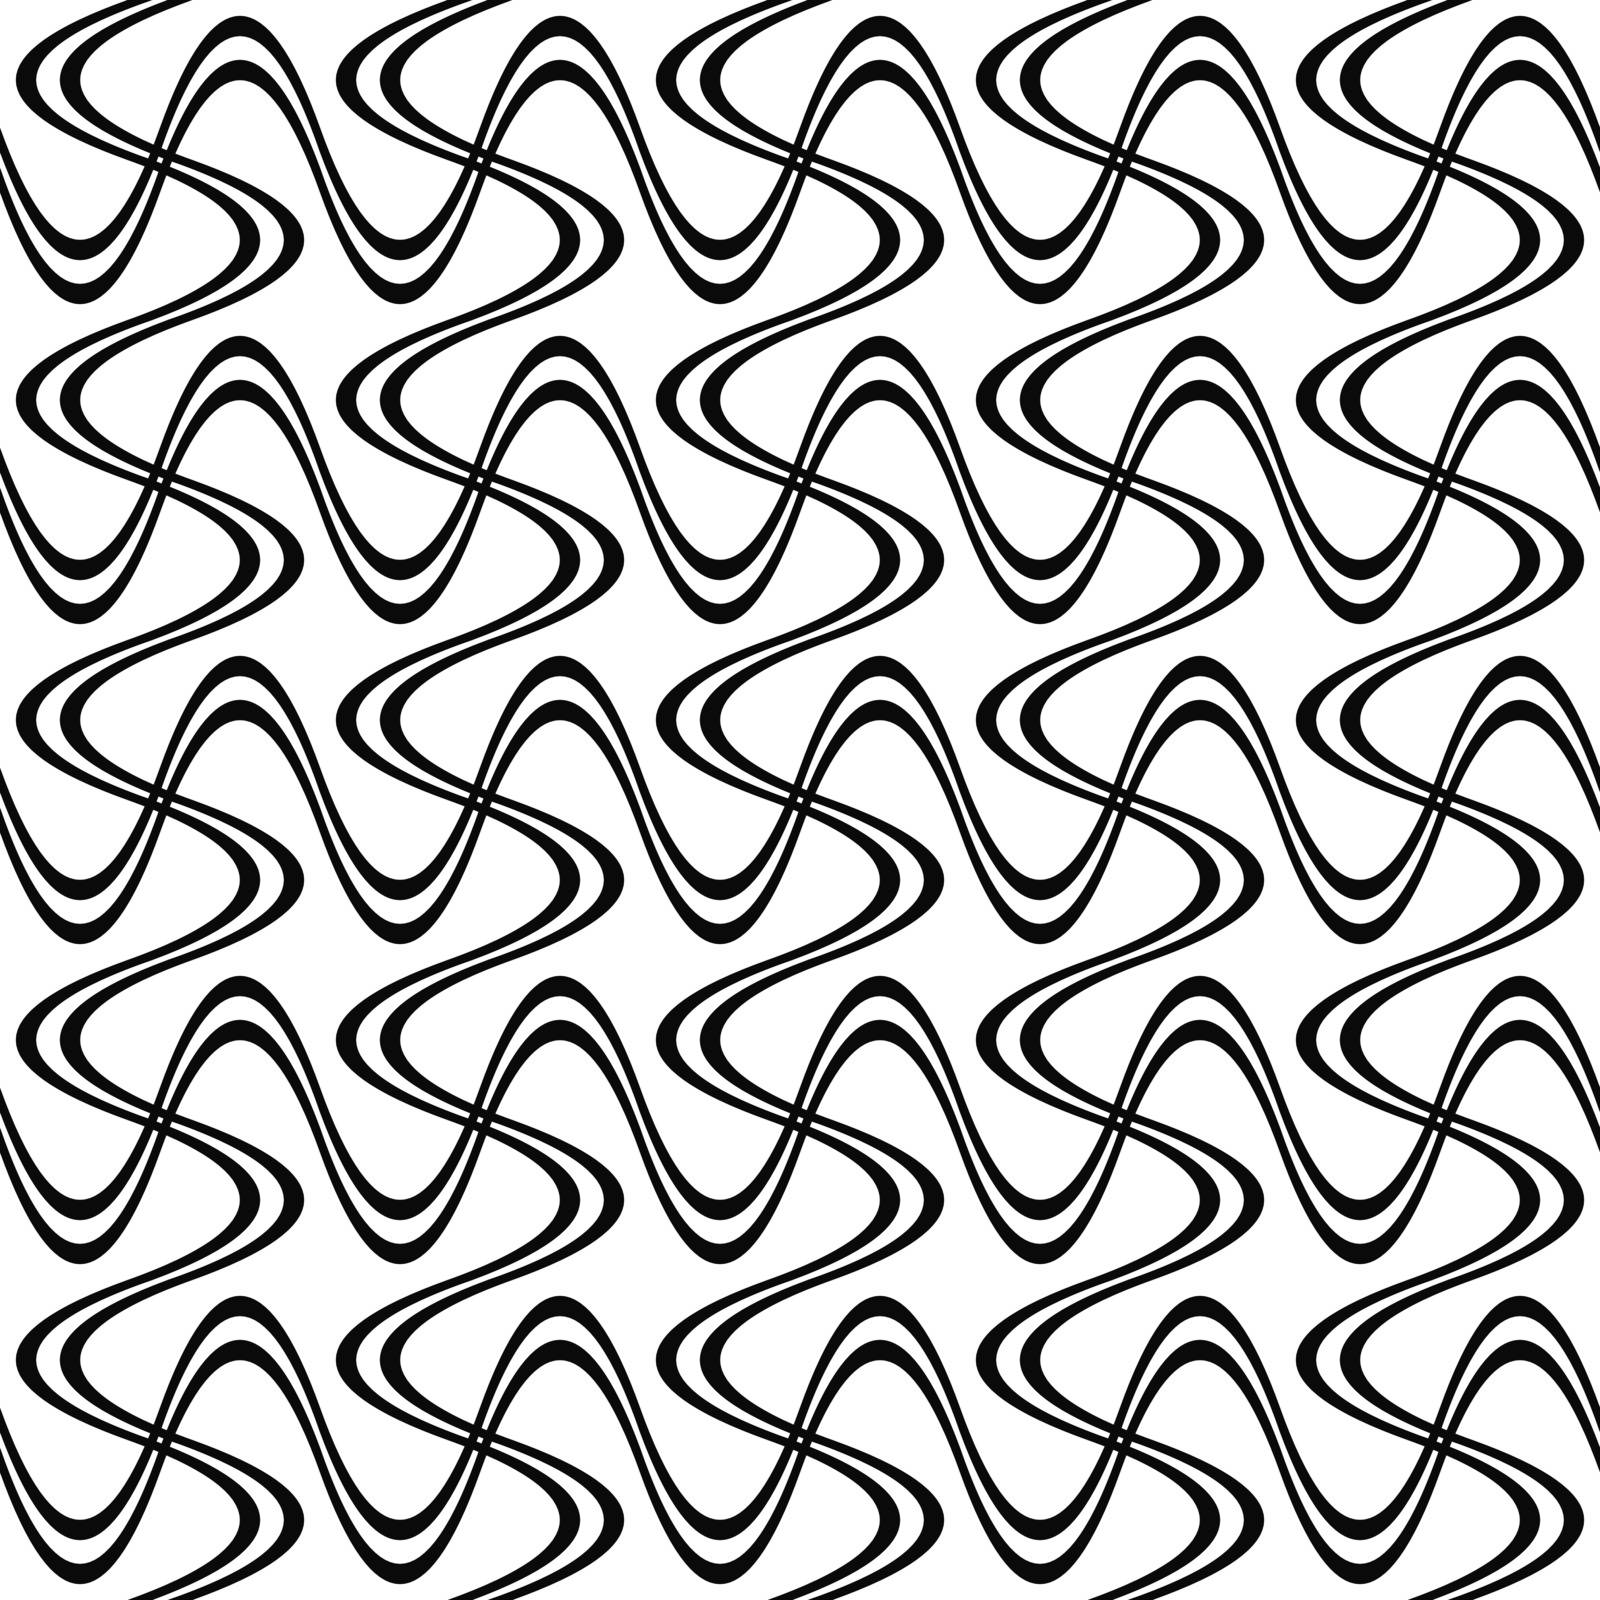 Repeating monochrome twisted stripe pattern by davidzydd